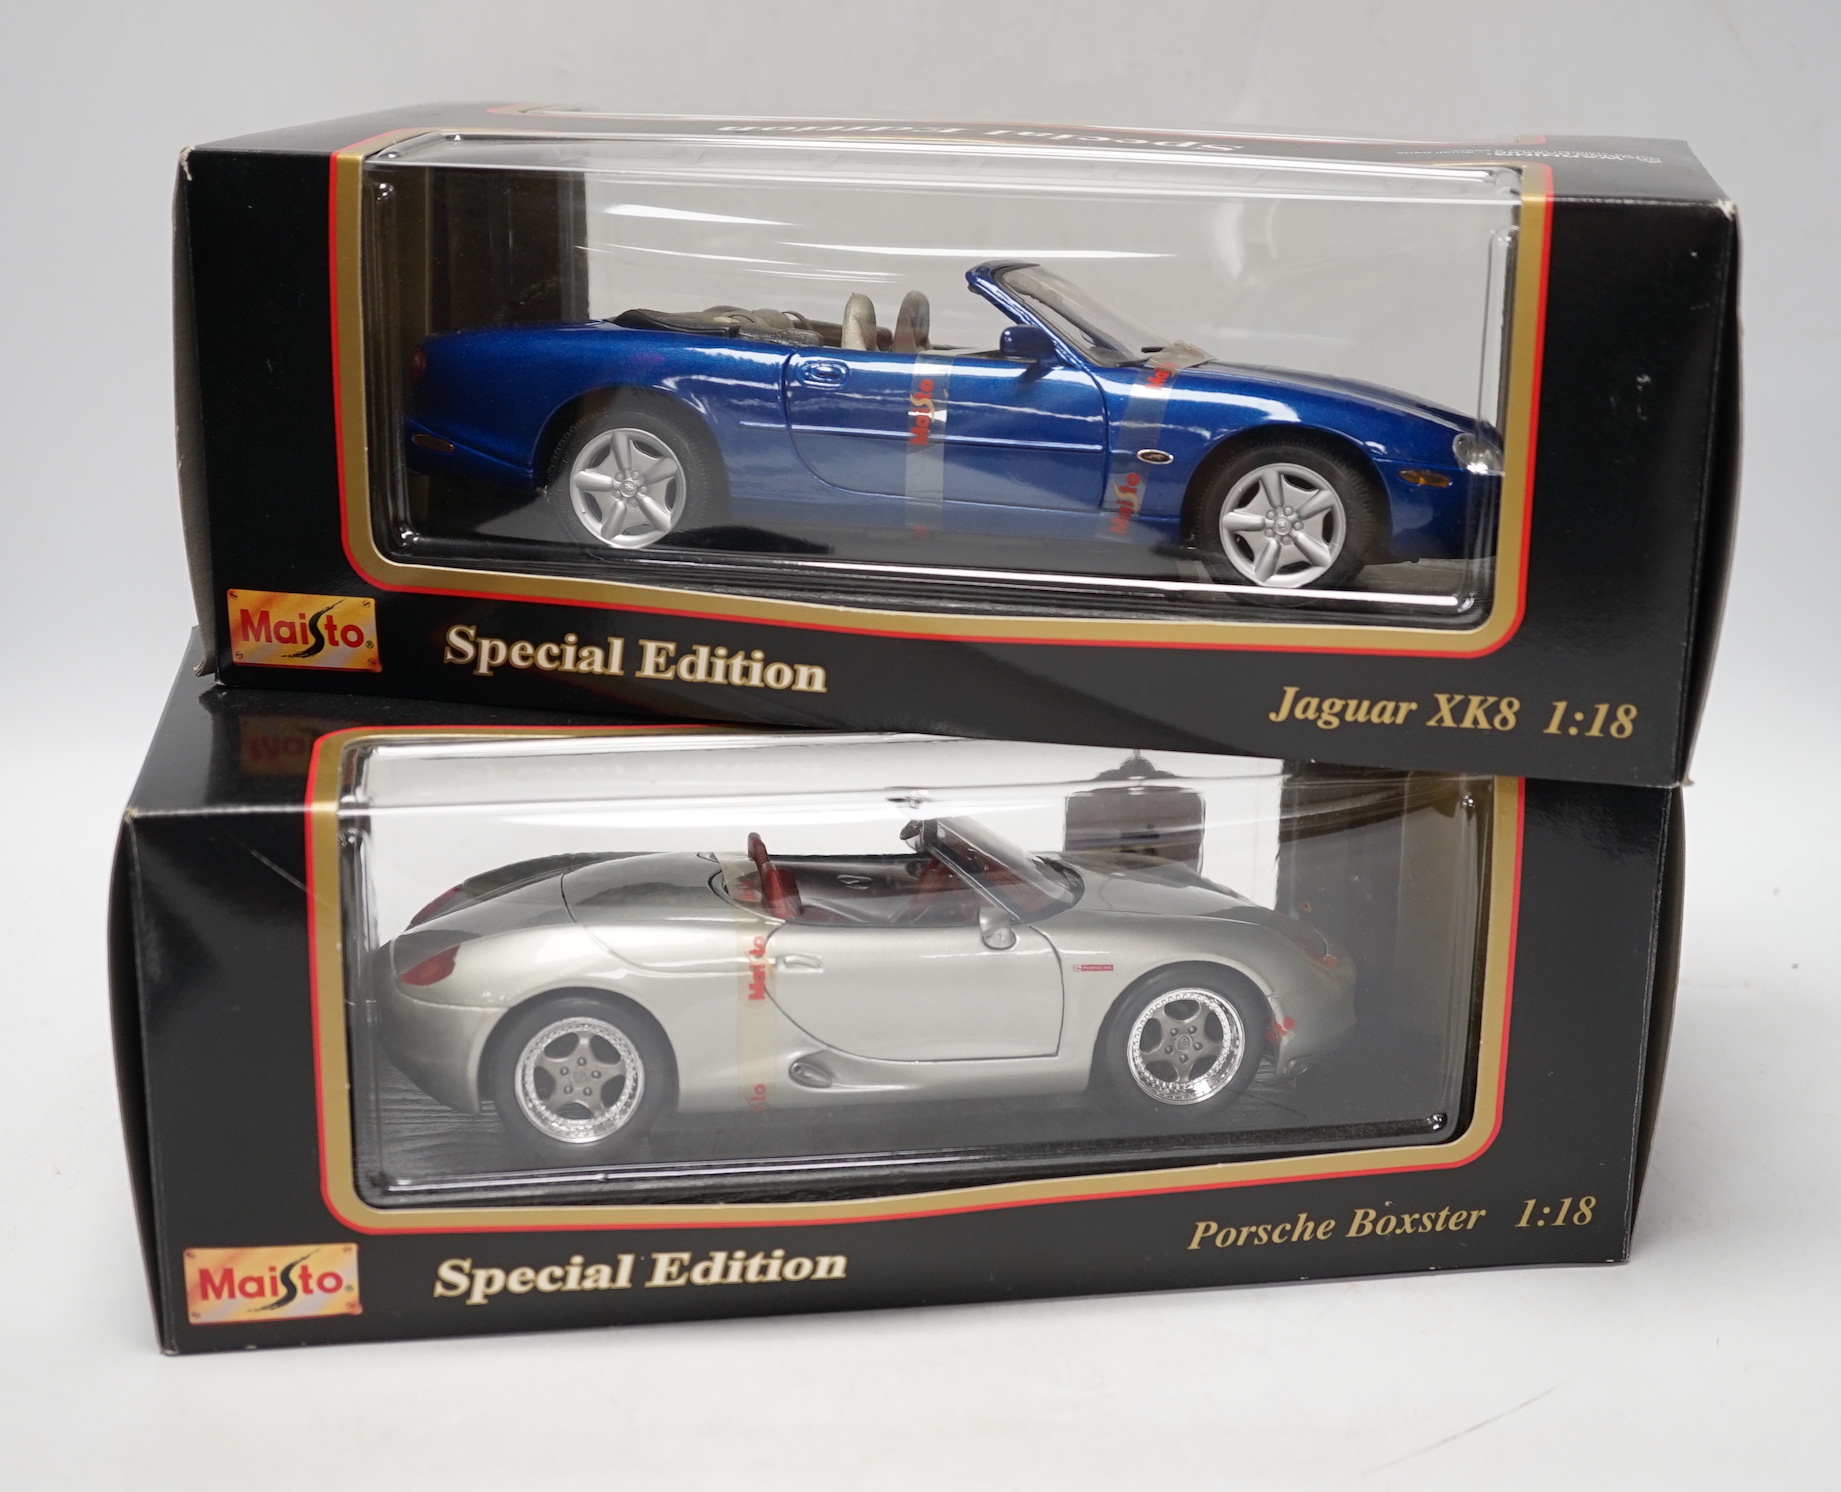 Five boxed Maisto 1:18 model cars; Porsche Boxster, Ferrari 550 maranello, Jaguar XK8, Dodge Concept vehicle and a Jaguar XJ220